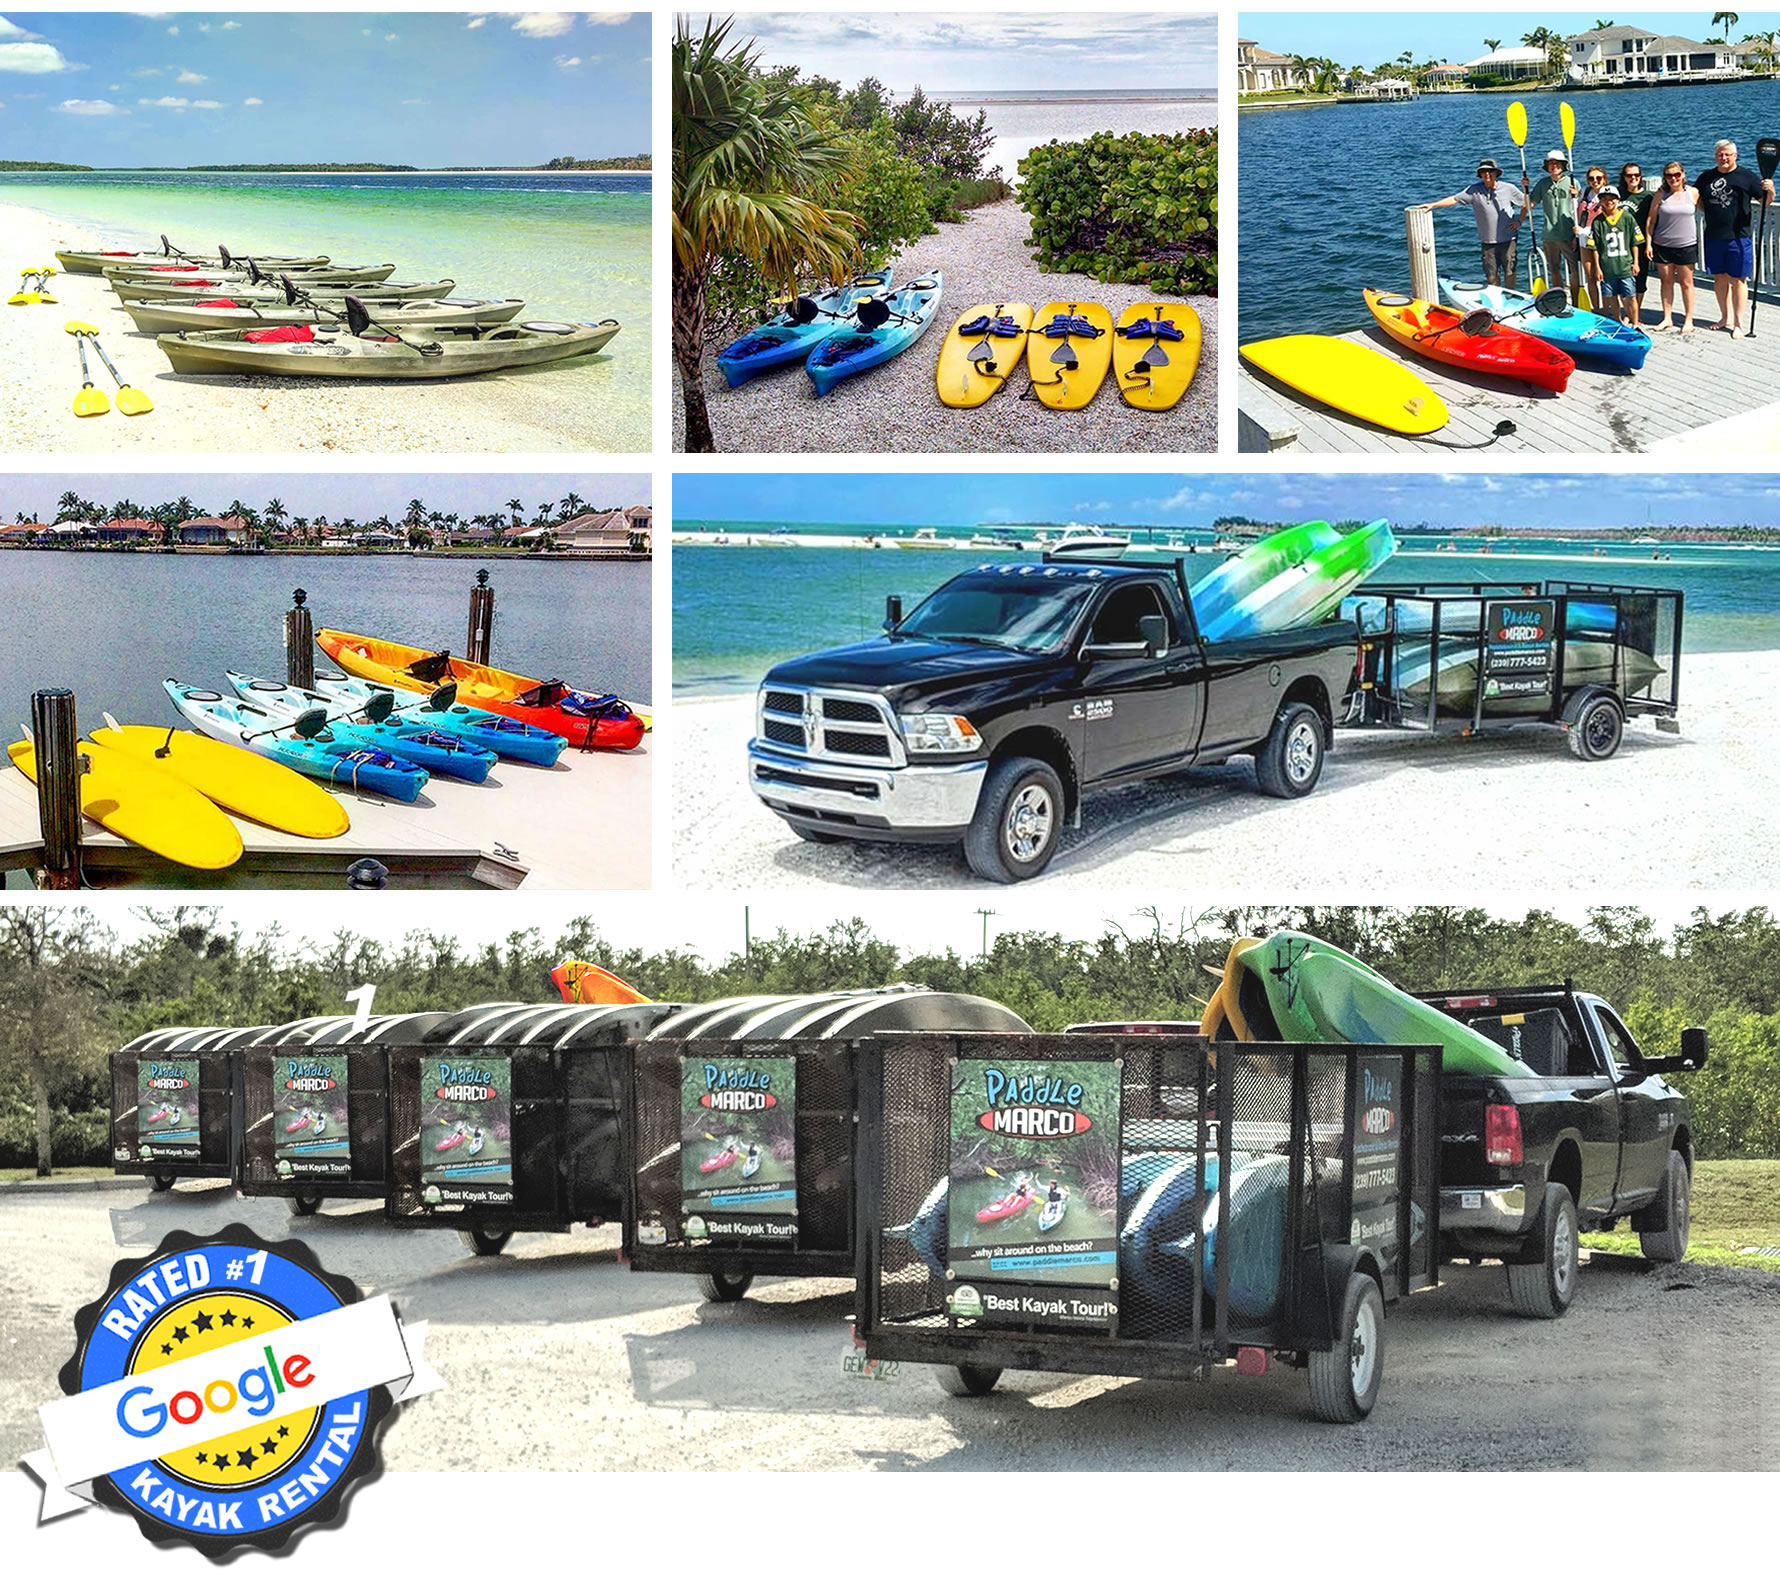 Marco Island Kayak Rental